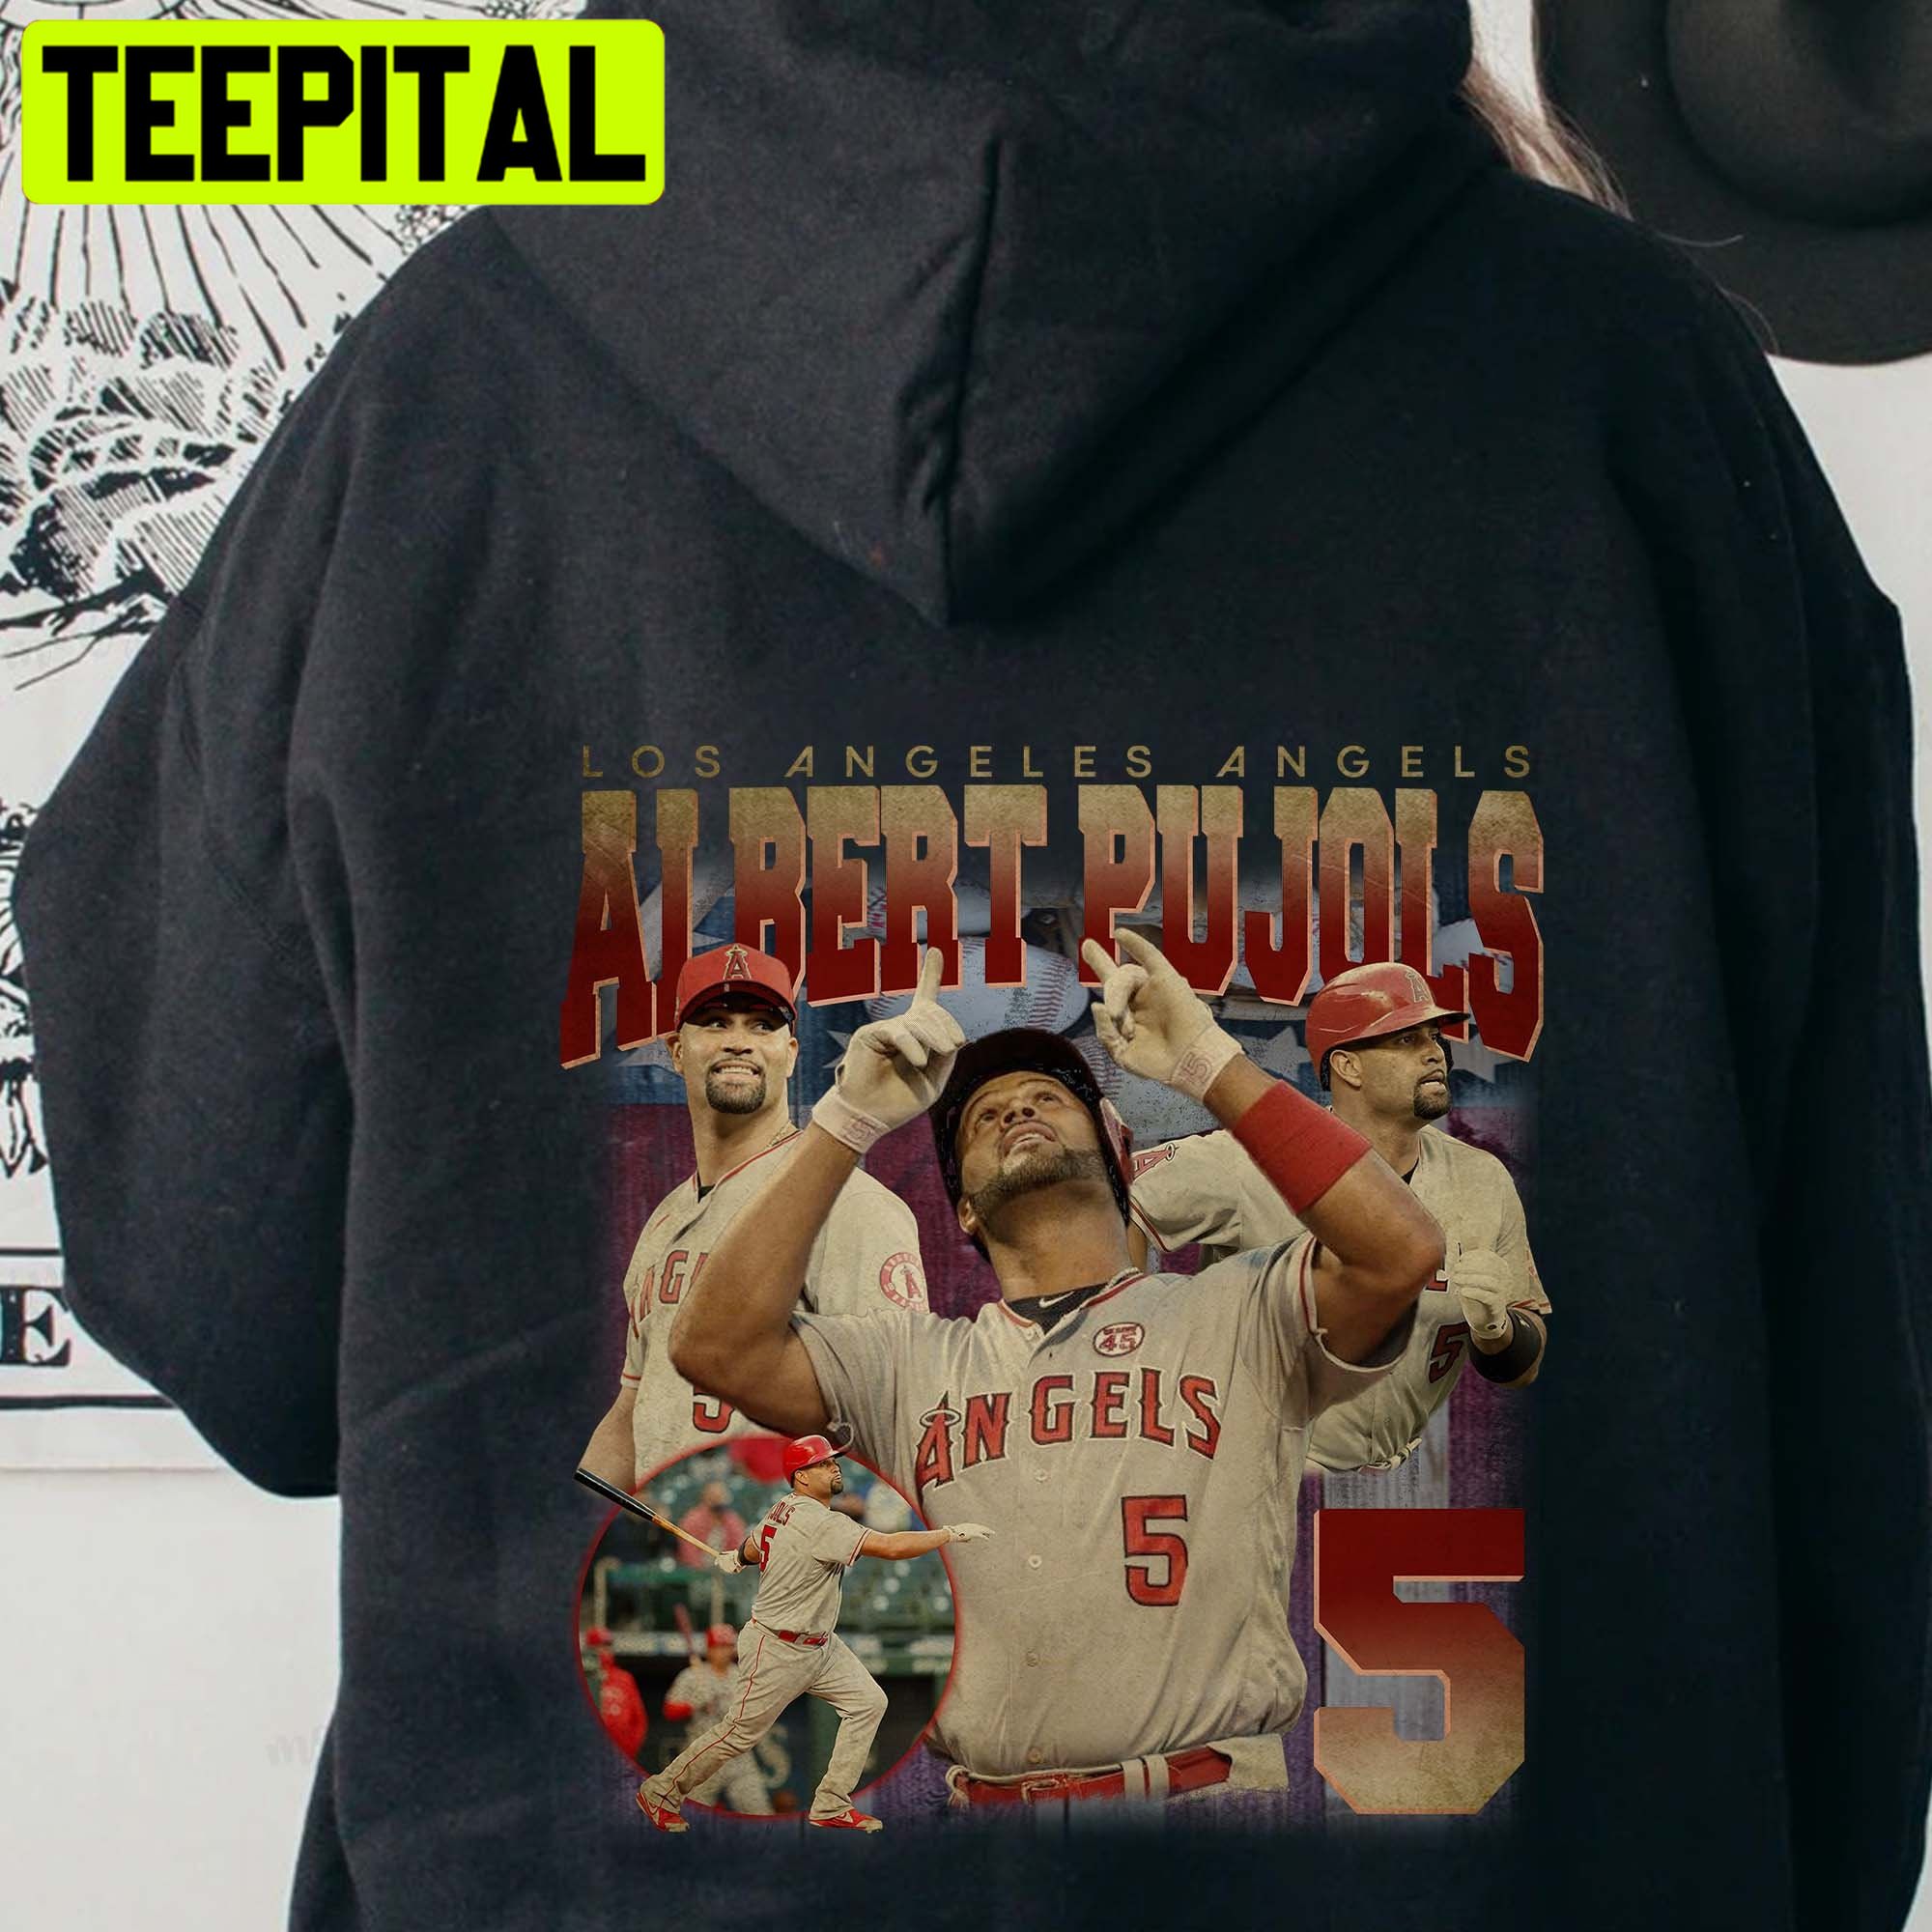 Albert Pujols Vintage 90s Baseball Players Trending Unisex Shirt – Teepital  – Everyday New Aesthetic Designs